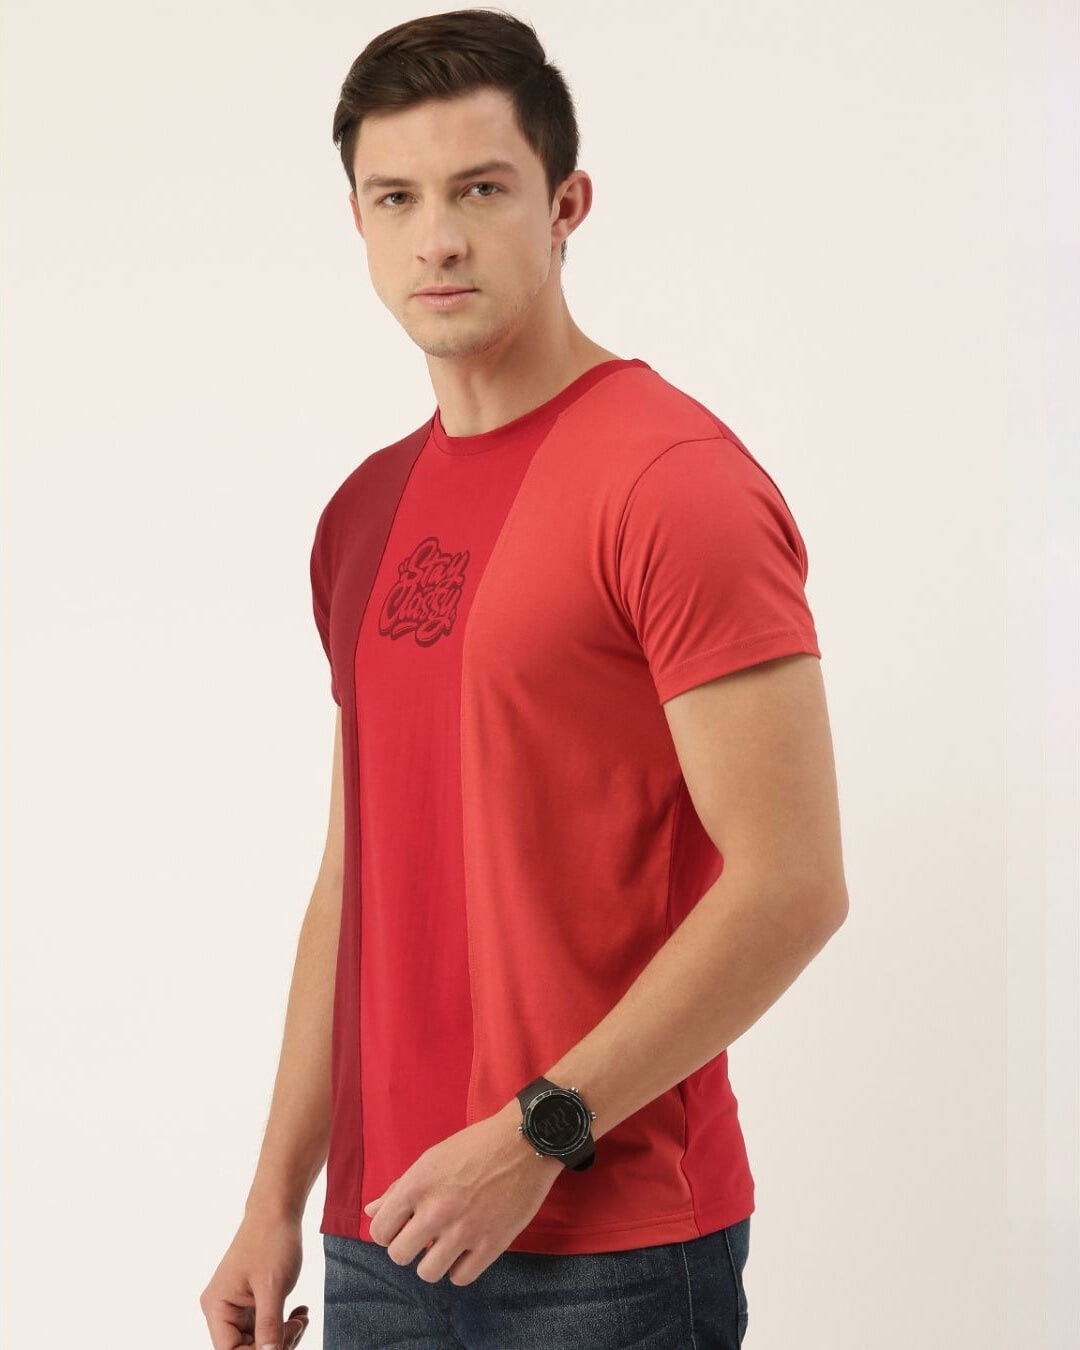 Shop Men's Maroon & Red Colourblocked T-shirt